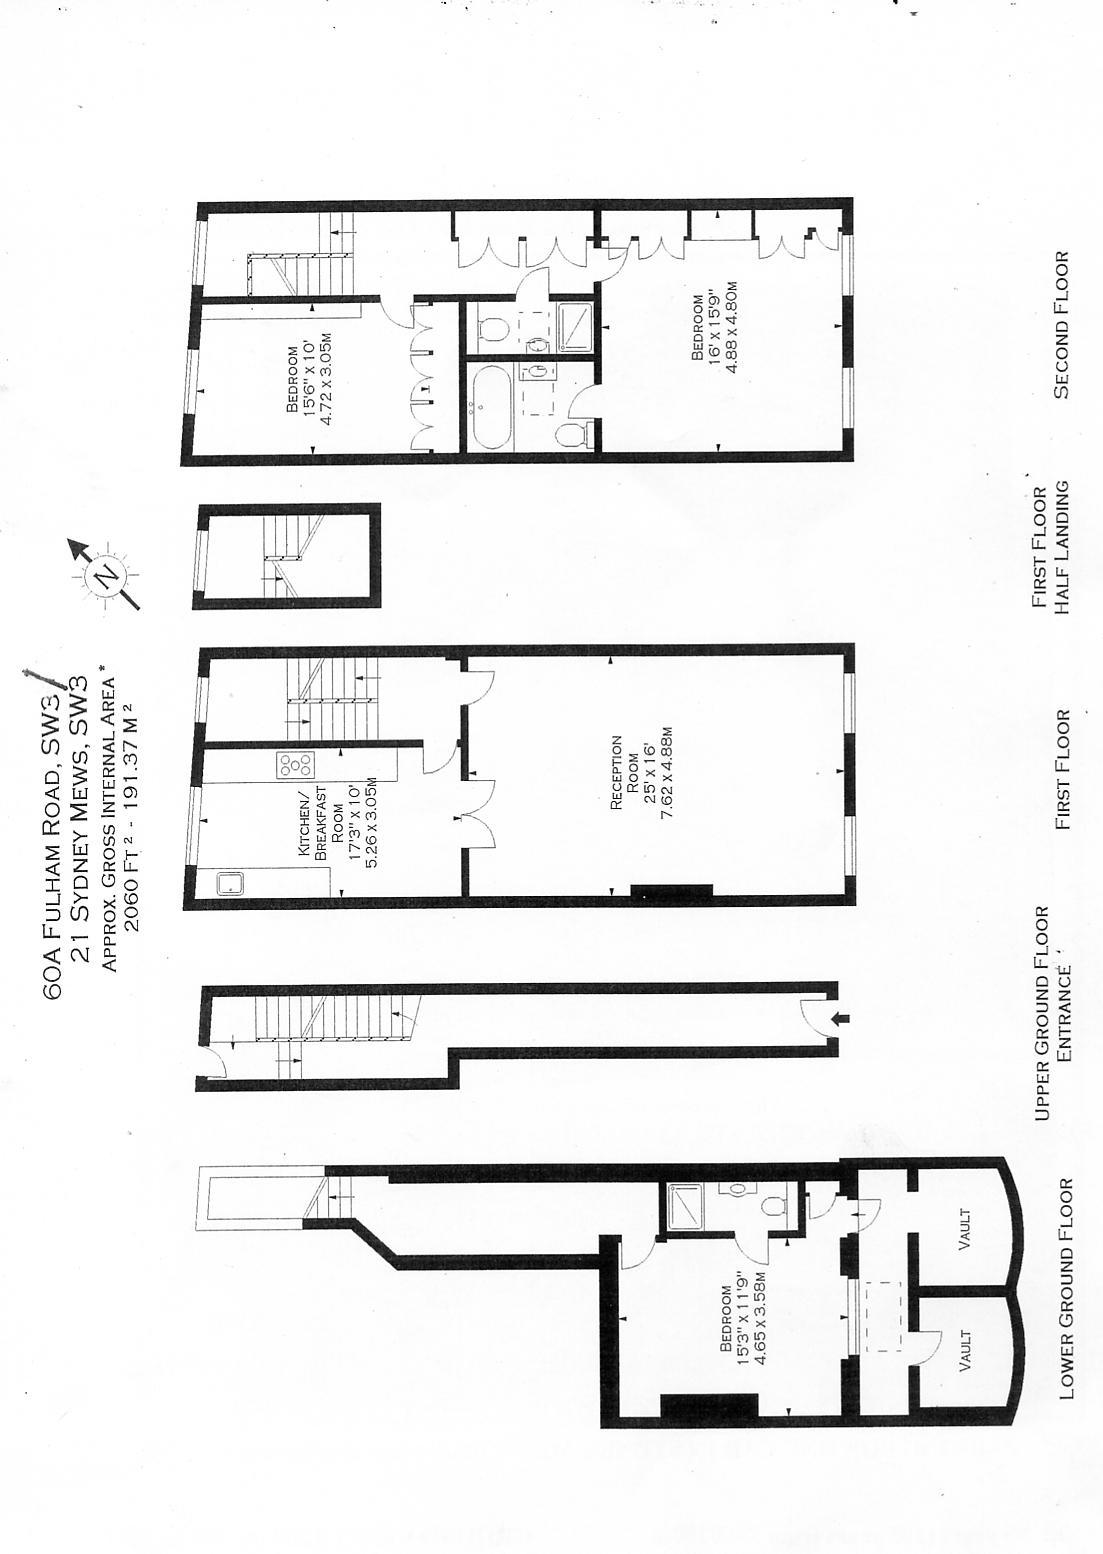 Floorplans For Sydney Mews, London